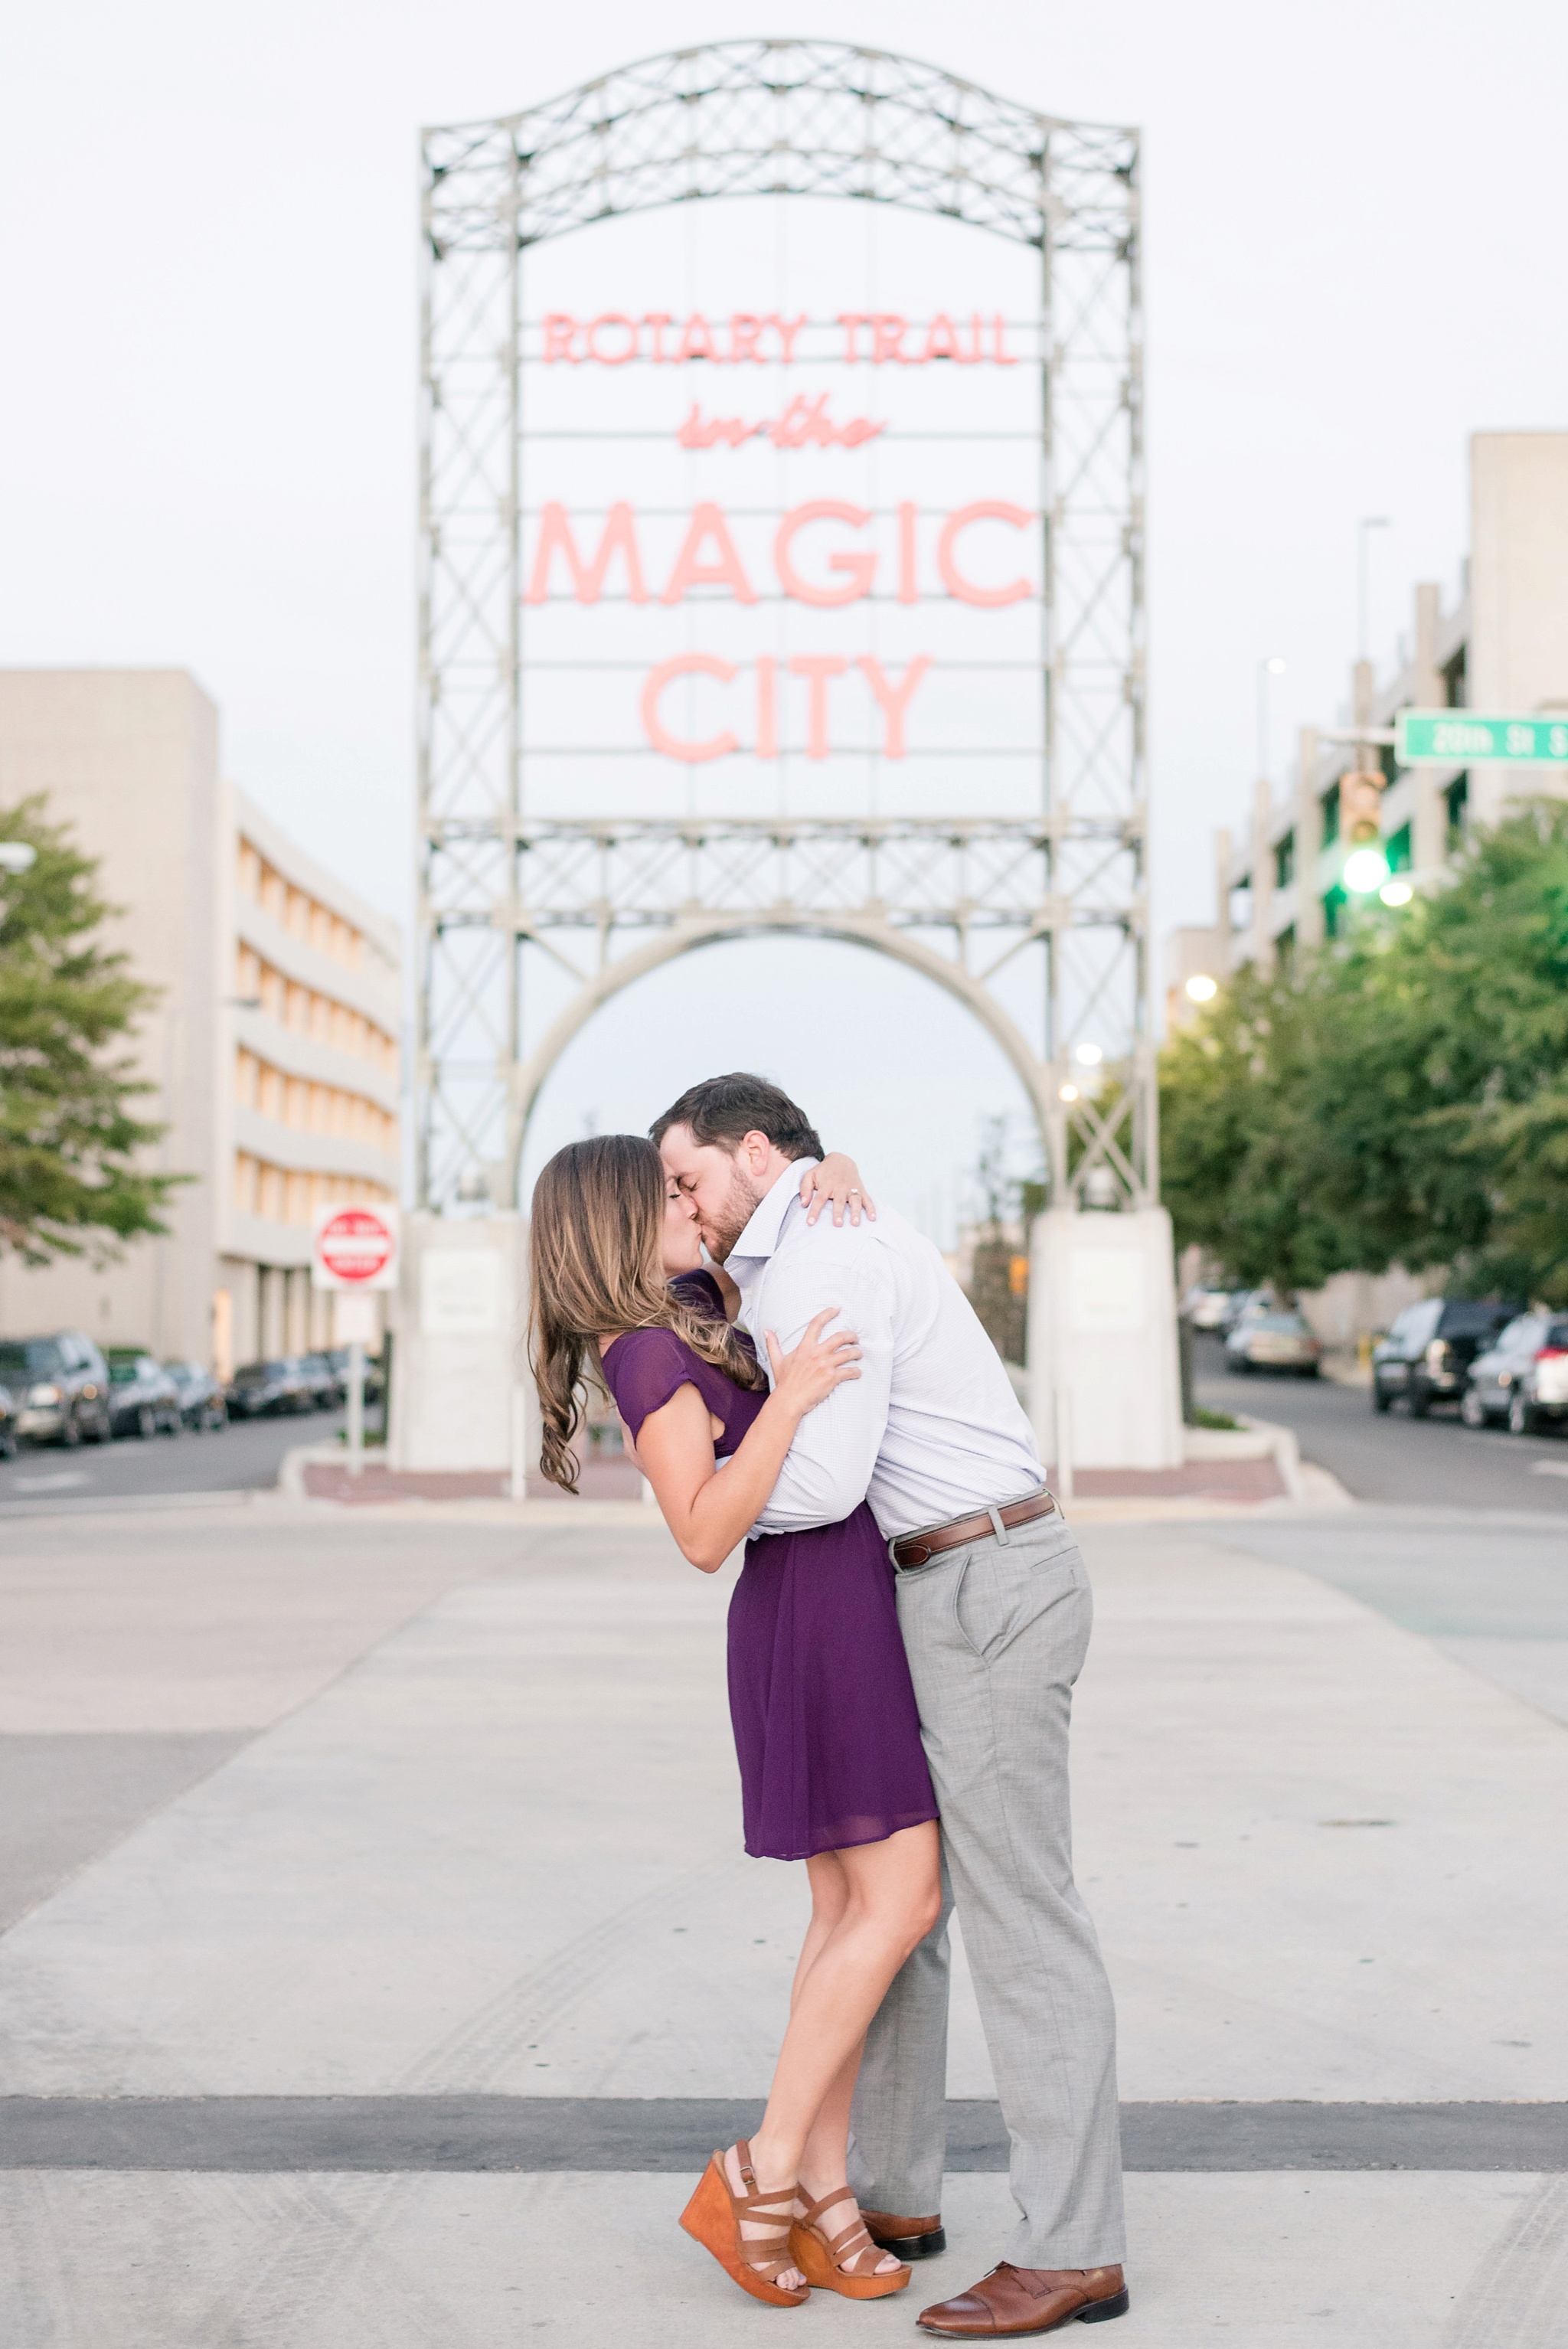 Downtown Birmingham Magic City Glad to Have you Engagement Session | Birmingham Alabama Wedding Photographers_0019.jpg